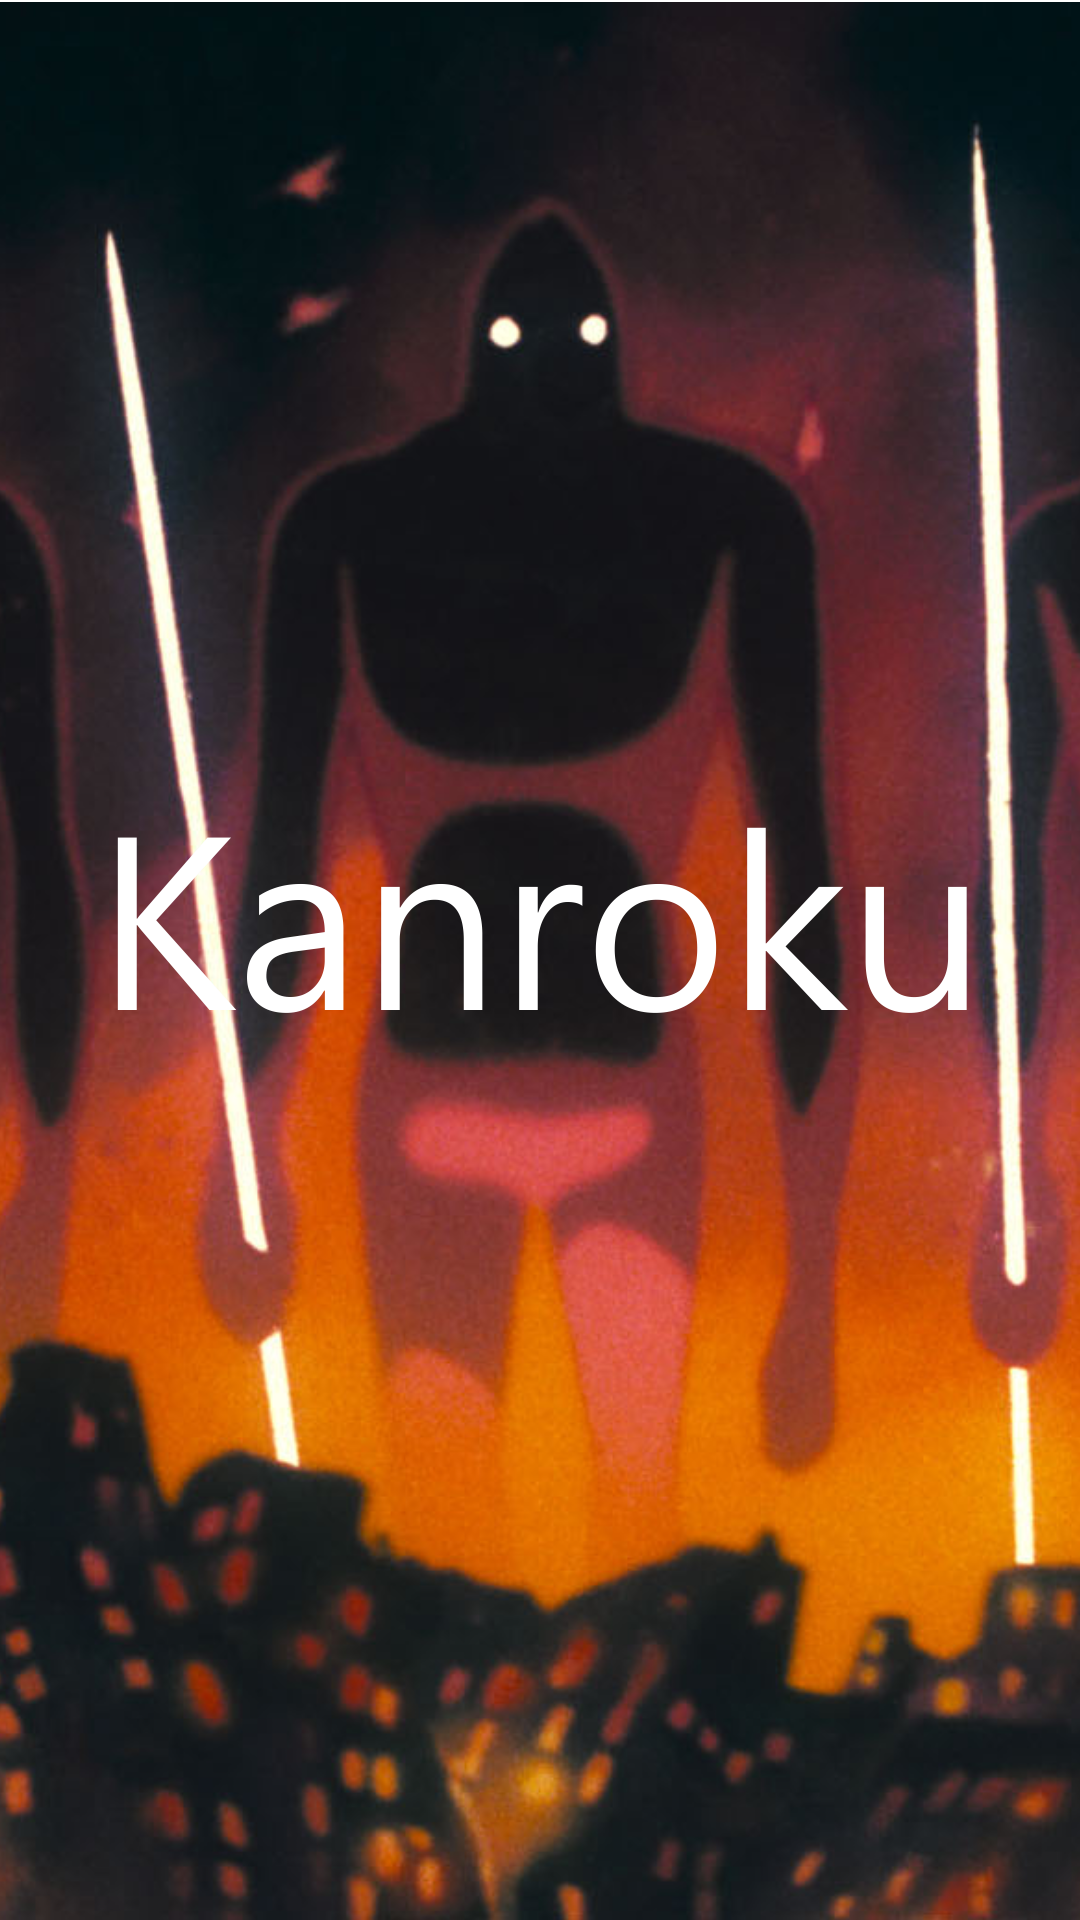 Kanroku